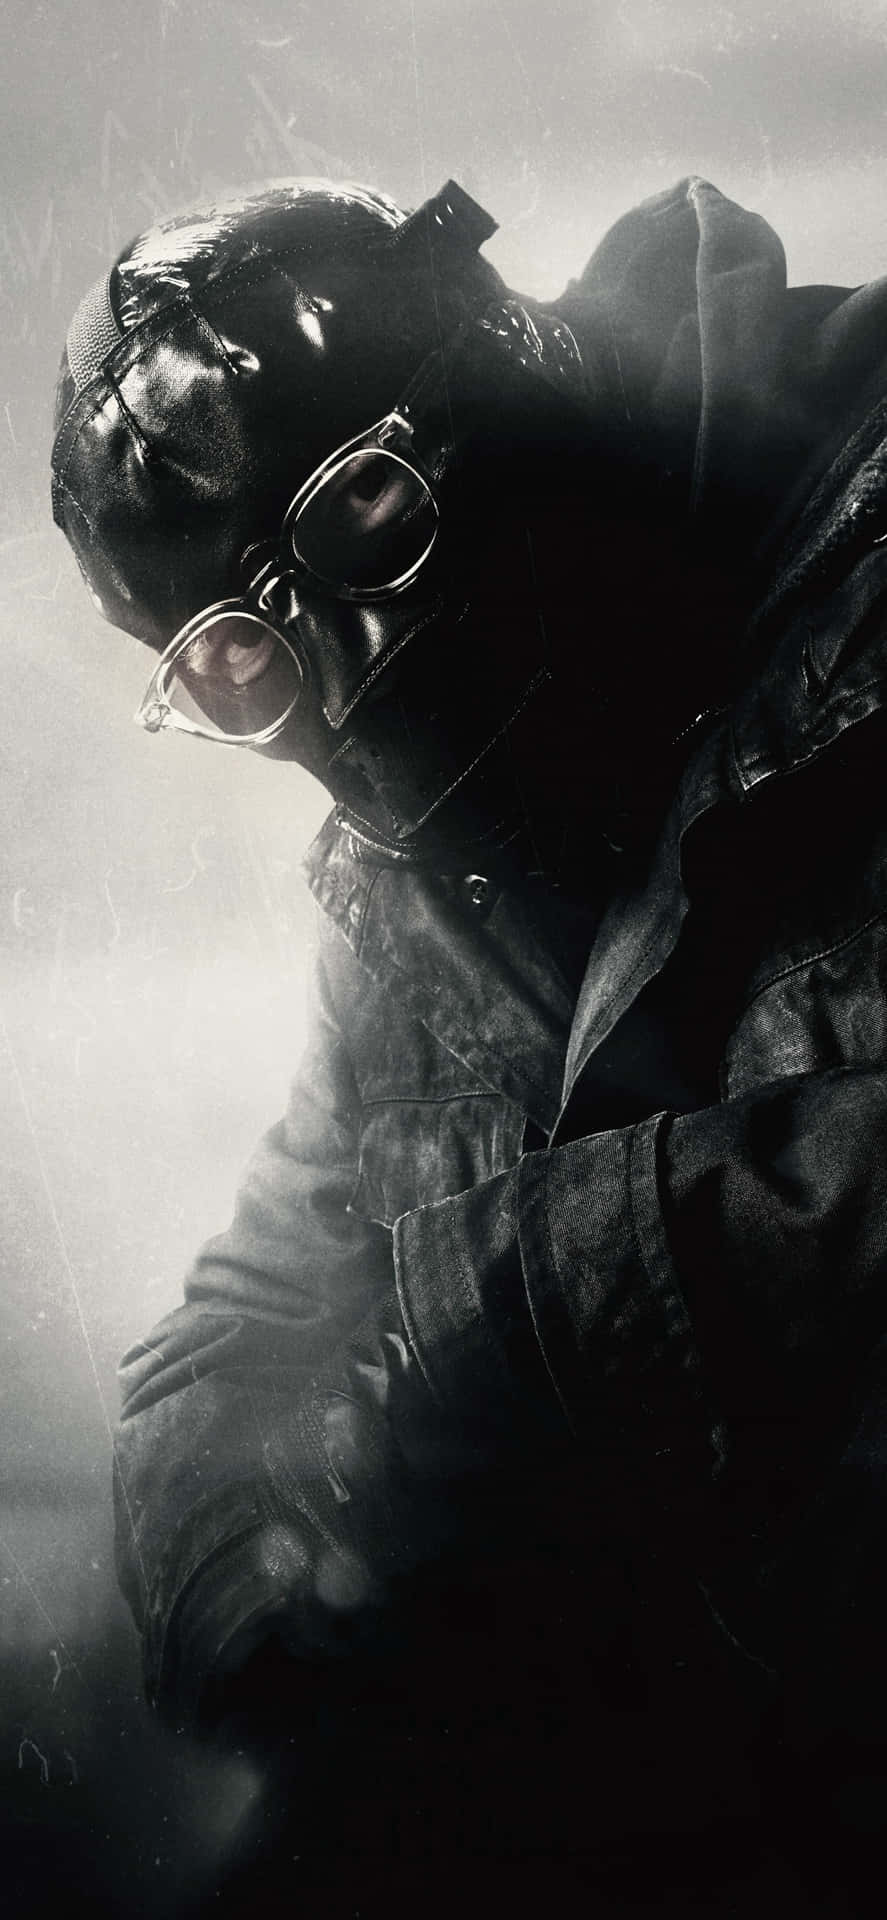 a man in a gas mask is holding a gun Wallpaper